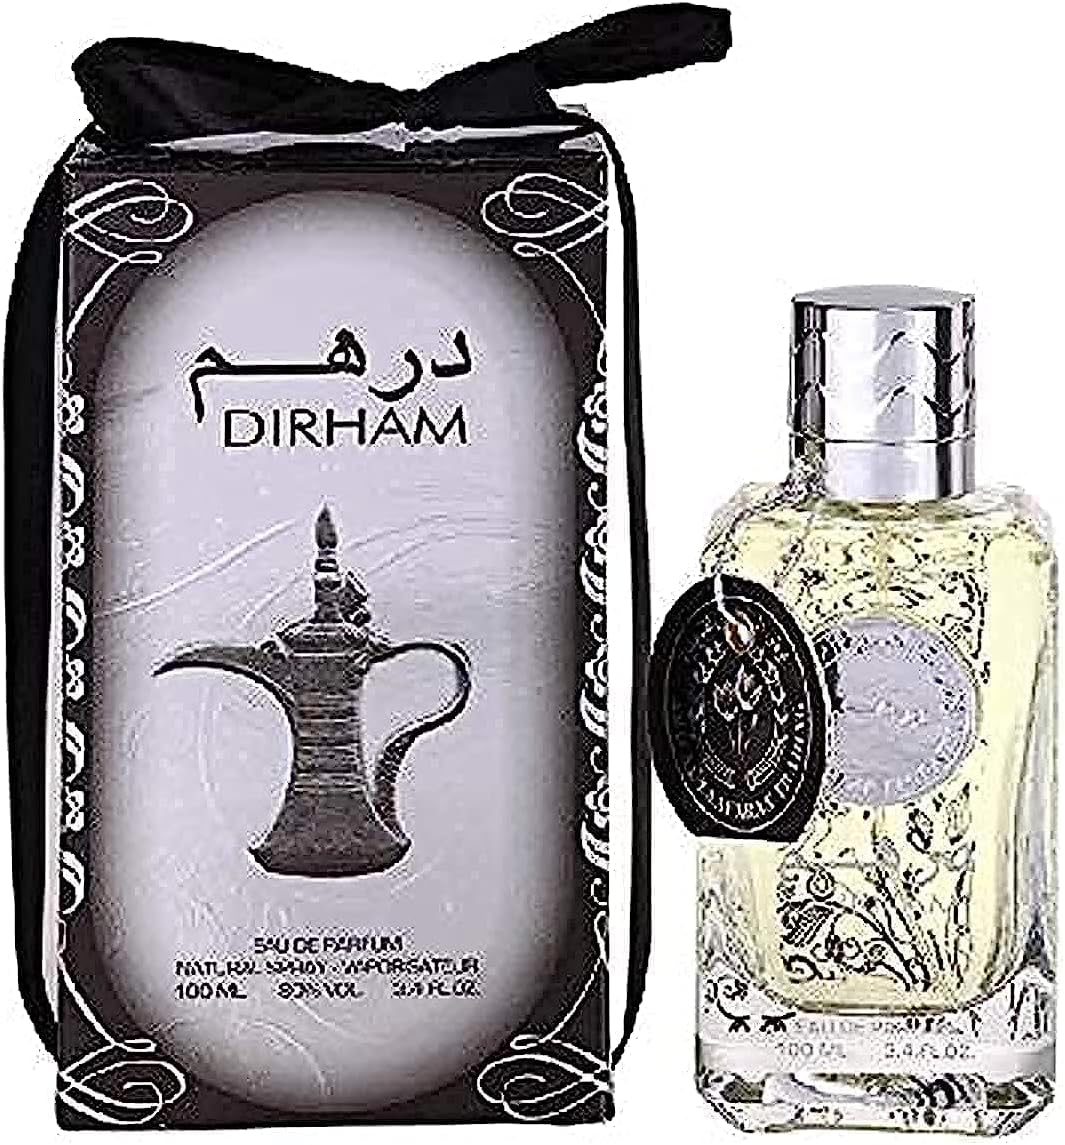 Dirham Eau De Parfum 100ml Value Pack of 4 